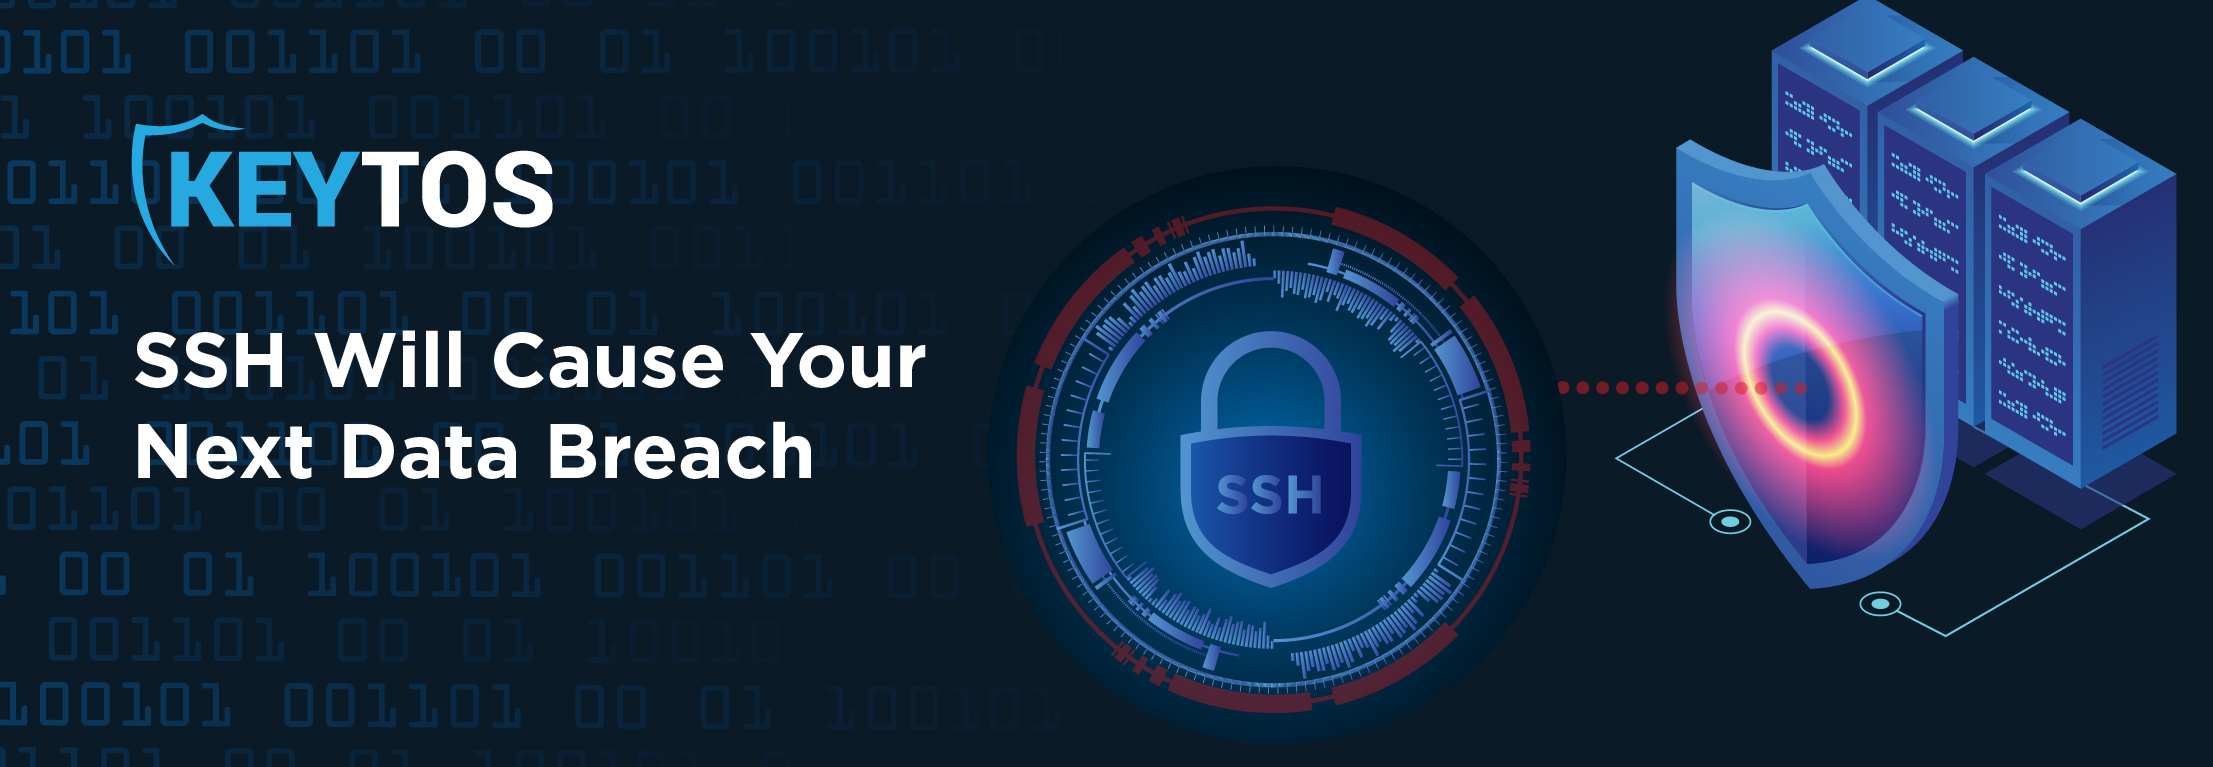 SSH certificates cause data breaches